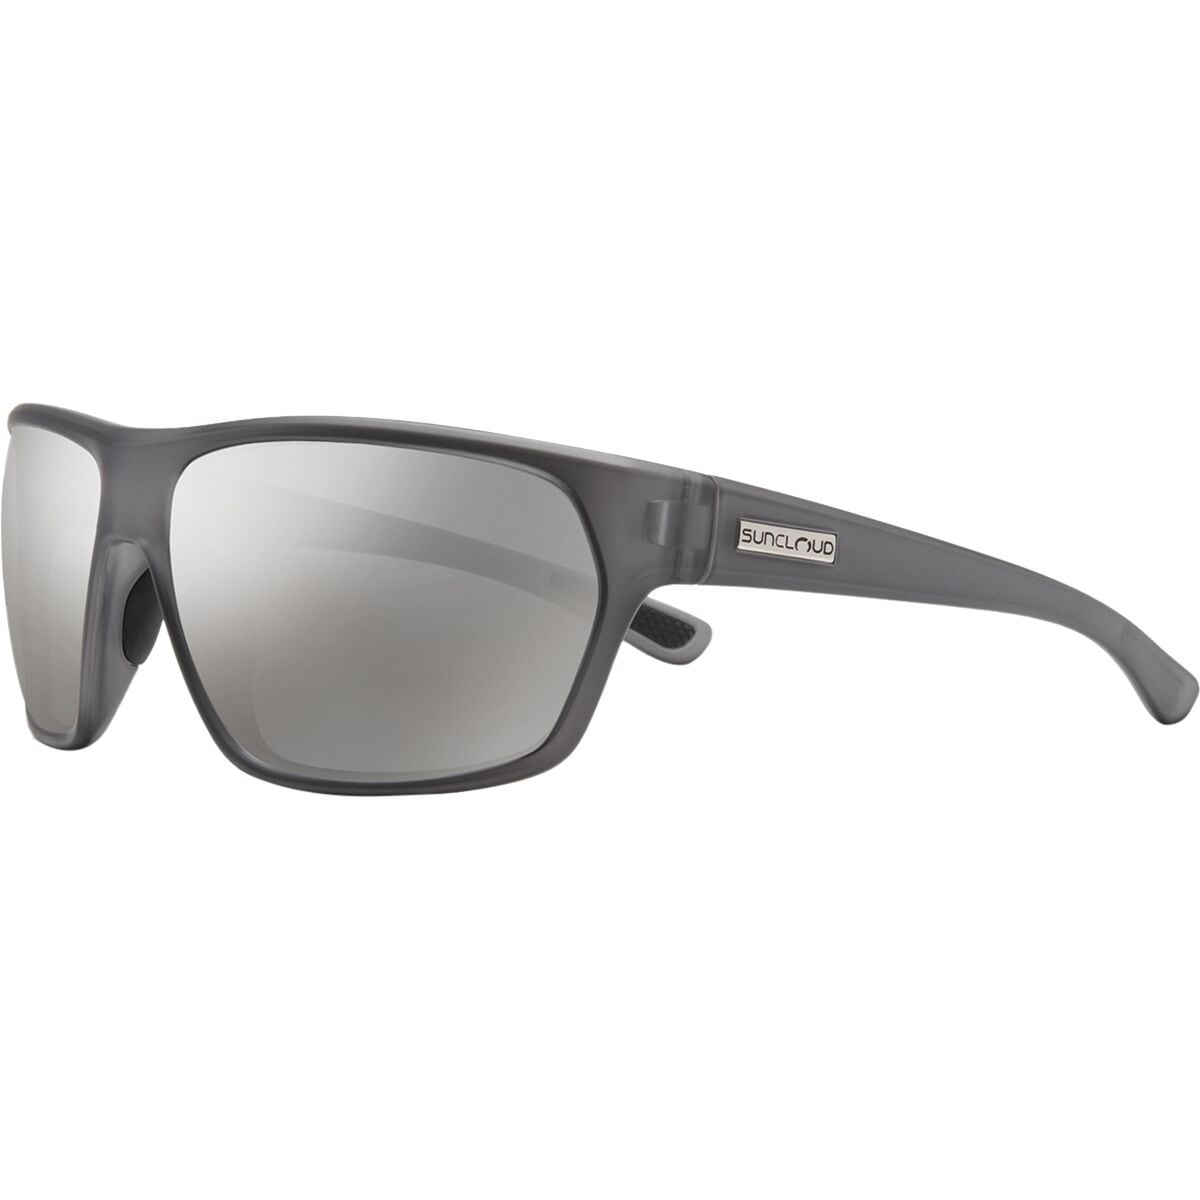 Поляризованные солнцезащитные очки boone Suncloud Polarized Optics, цвет matte silver gray/polar silver mirror